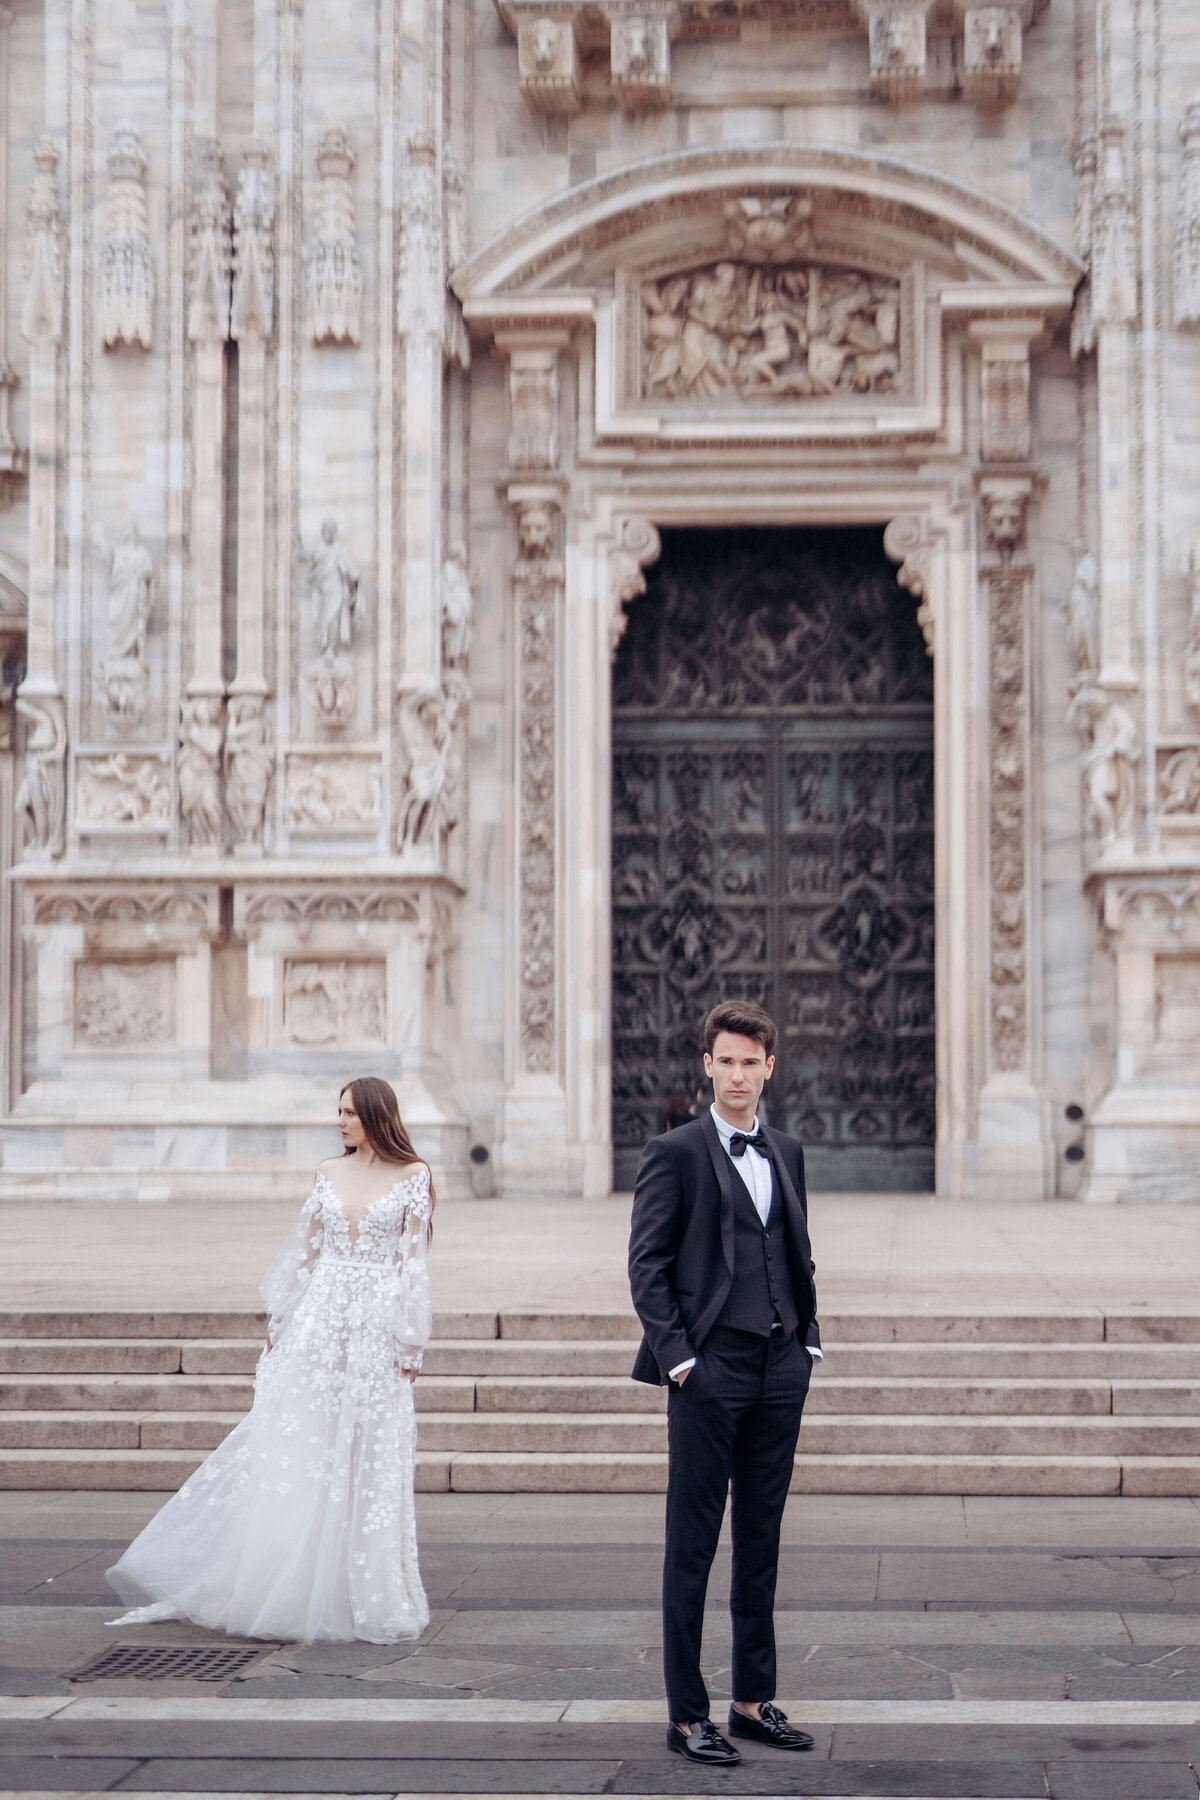 060-Milan-Duomo-Inspiration-Love-Story Elopement-Cinematic-Romance-Destination-Wedding-Editorial-Luxury-Fine-Art-Lisa-Vigliotta-Photography